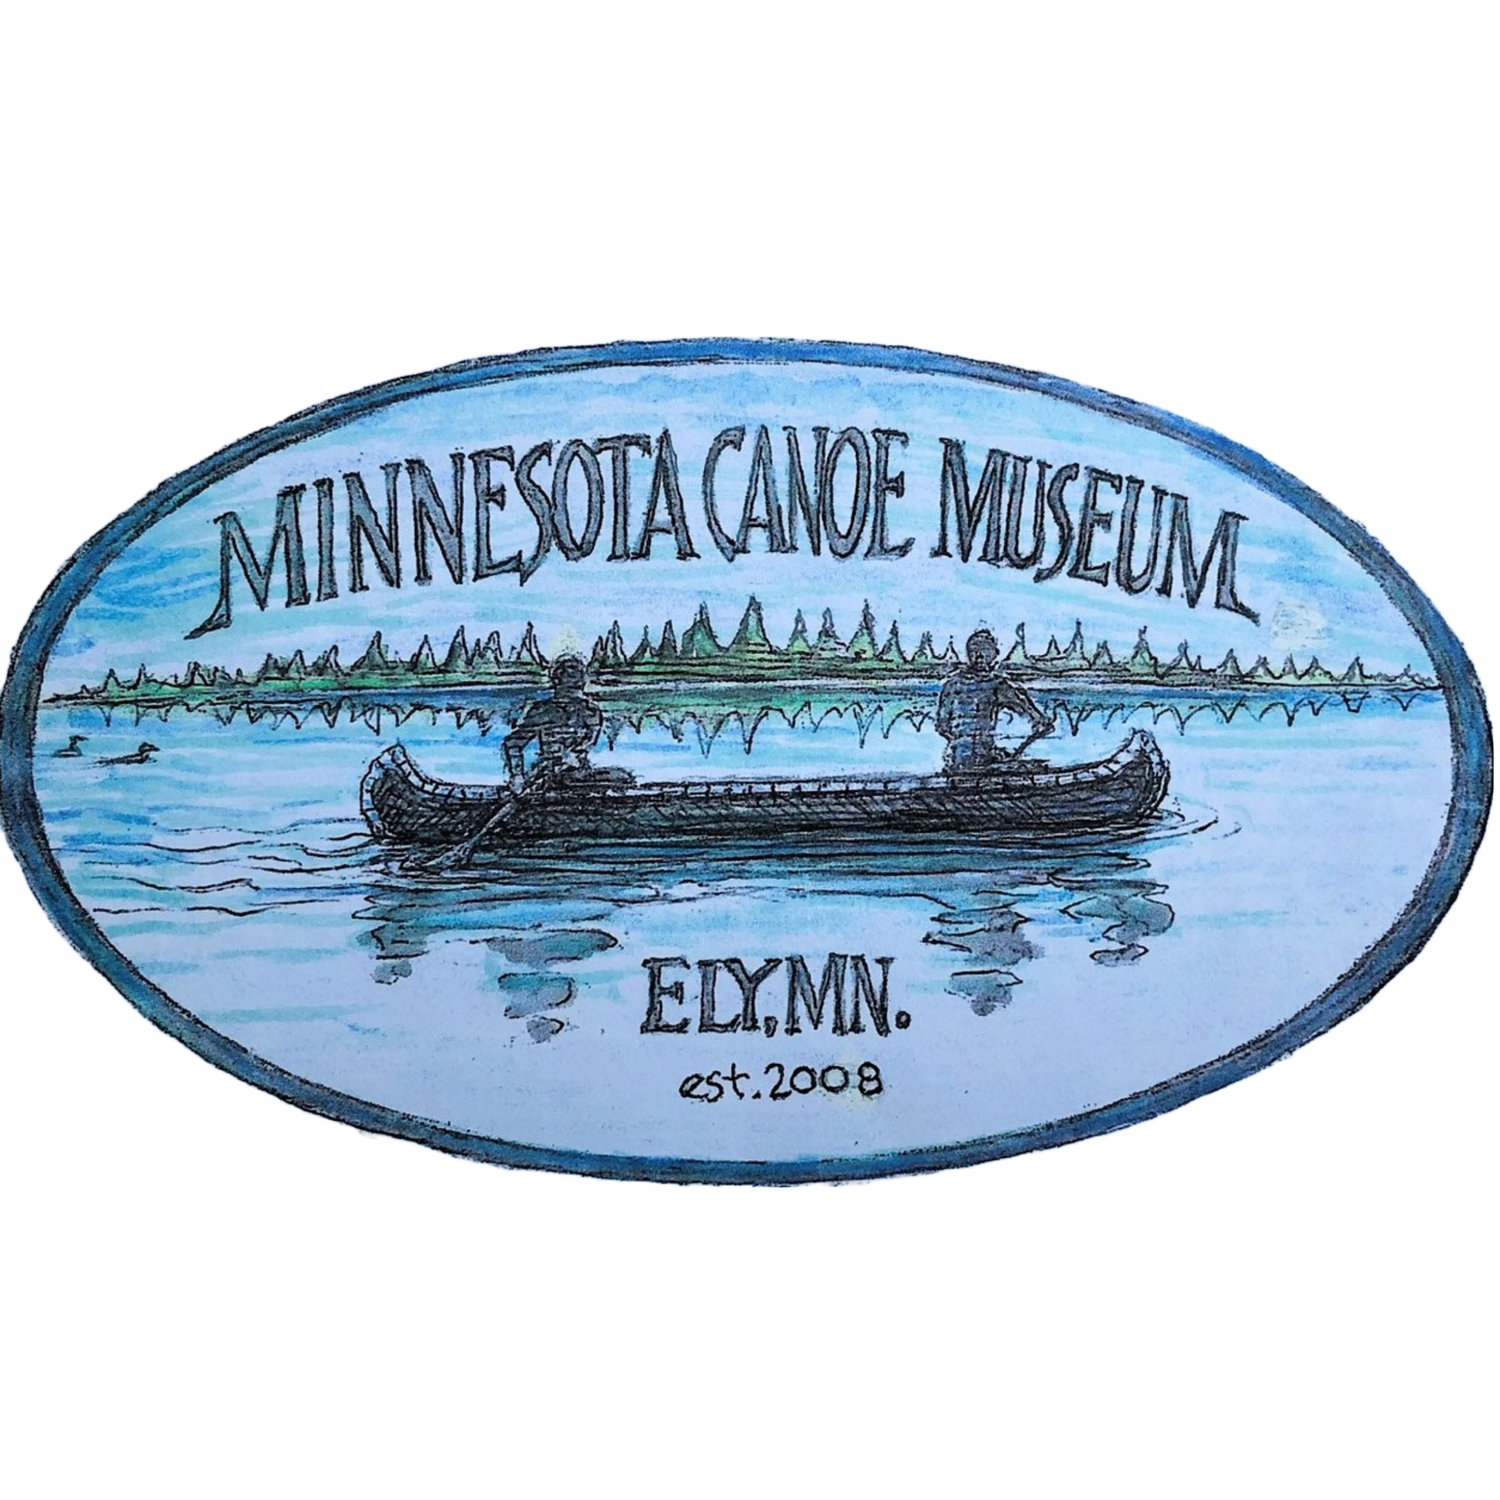 The Minnesota Canoe Museum